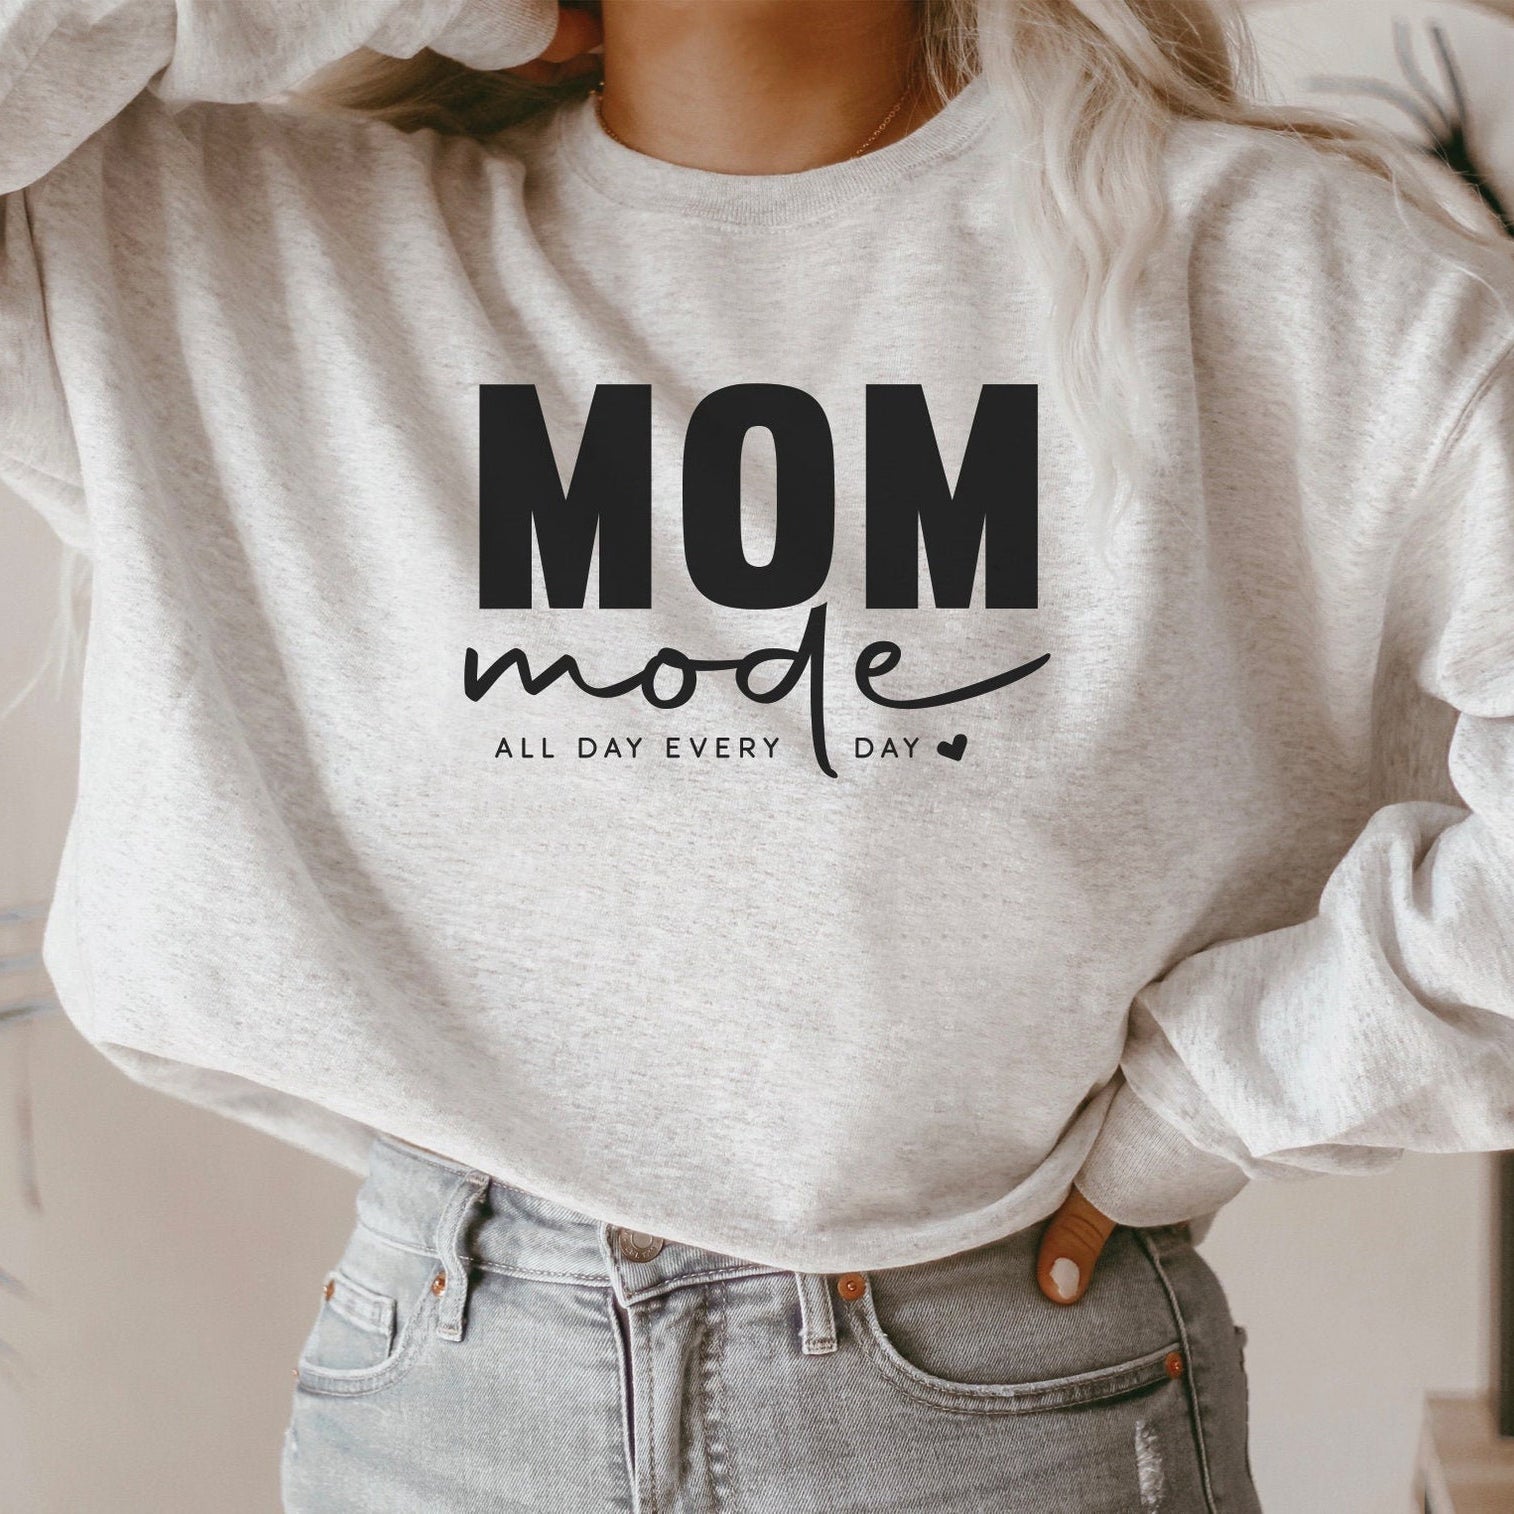 Mom Mode Crewneck Sweatshirt